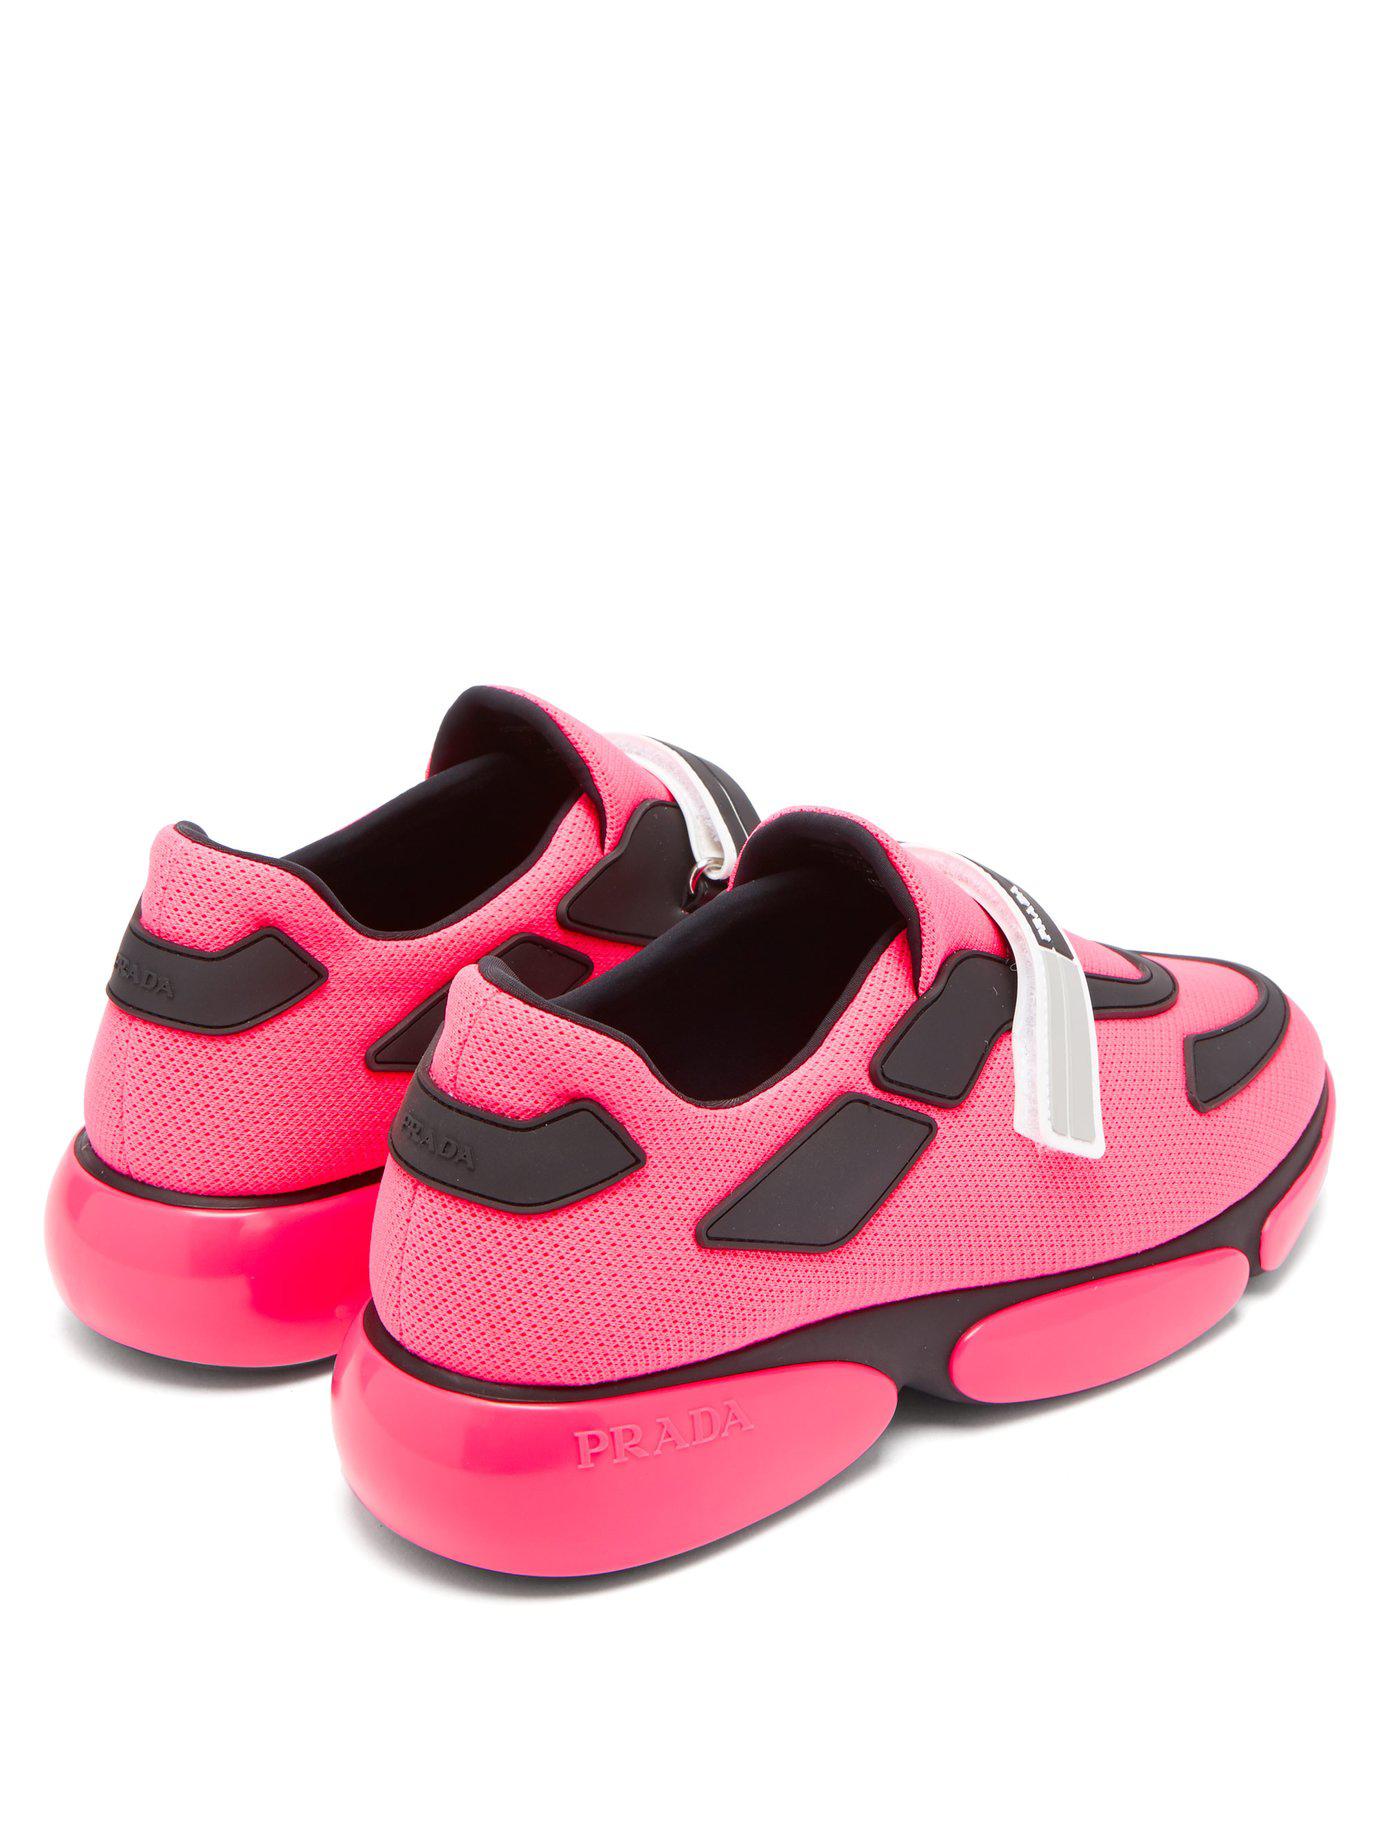 Prada Cloudbust Nylon Trainers in Pink | Lyst